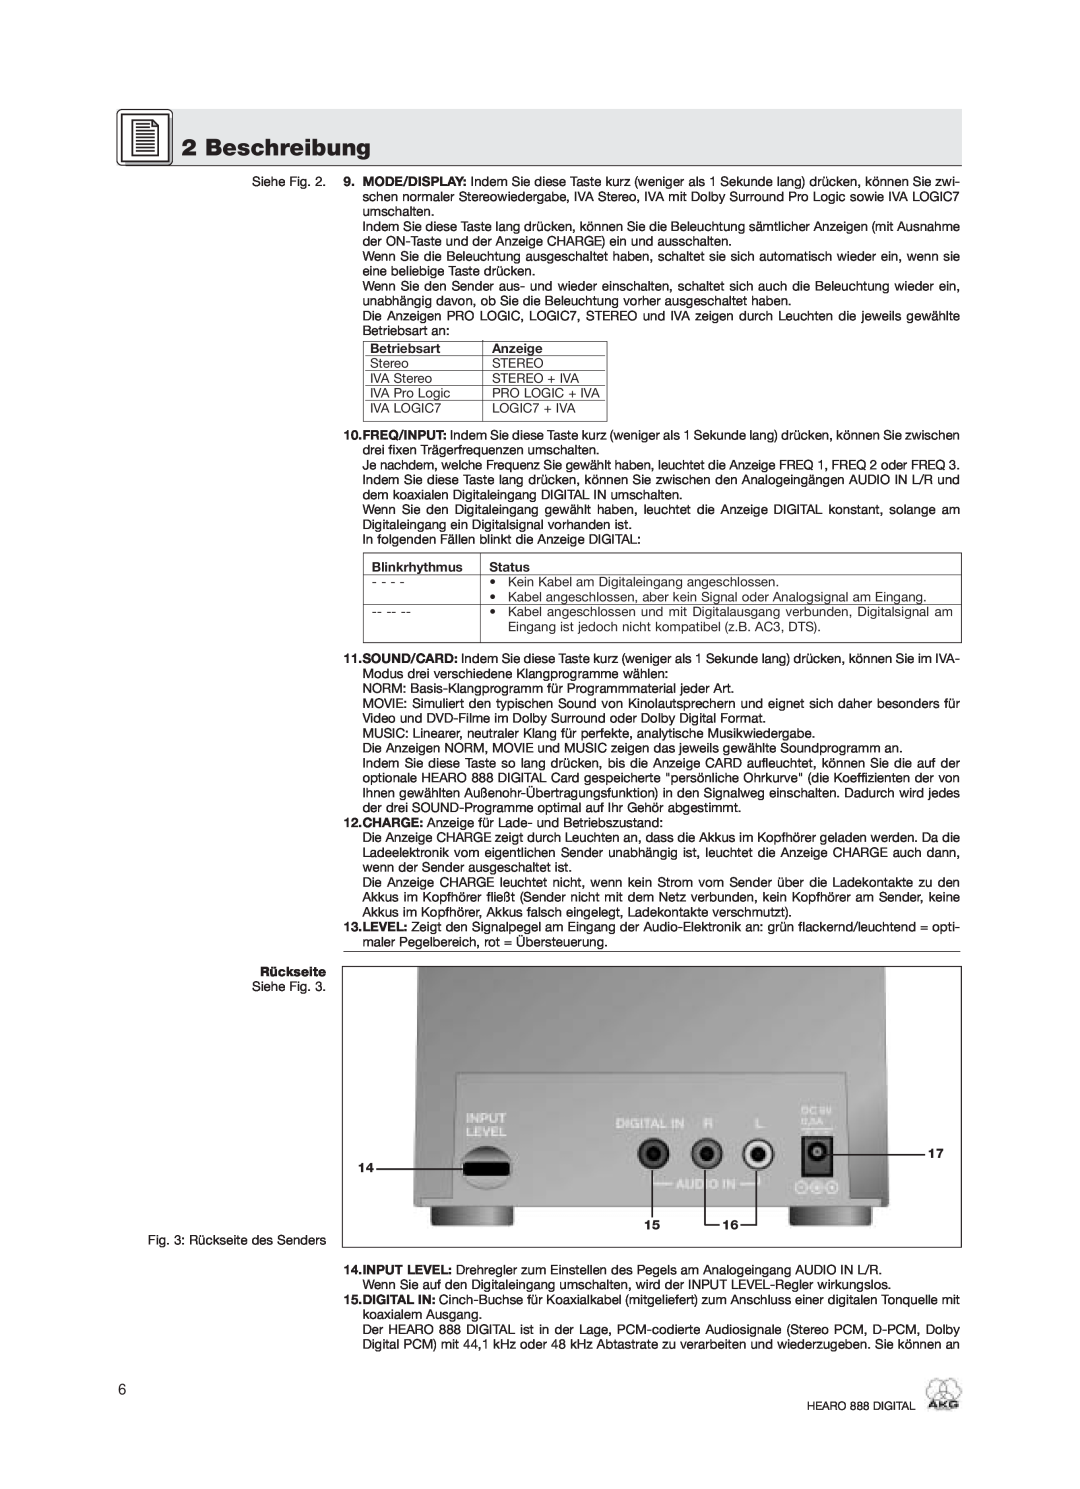 AKG Acoustics HEARO 888 specifications Beschreibung, Betriebsart, Anzeige, Rückseite, Blinkrhythmus, Status, 17 14 